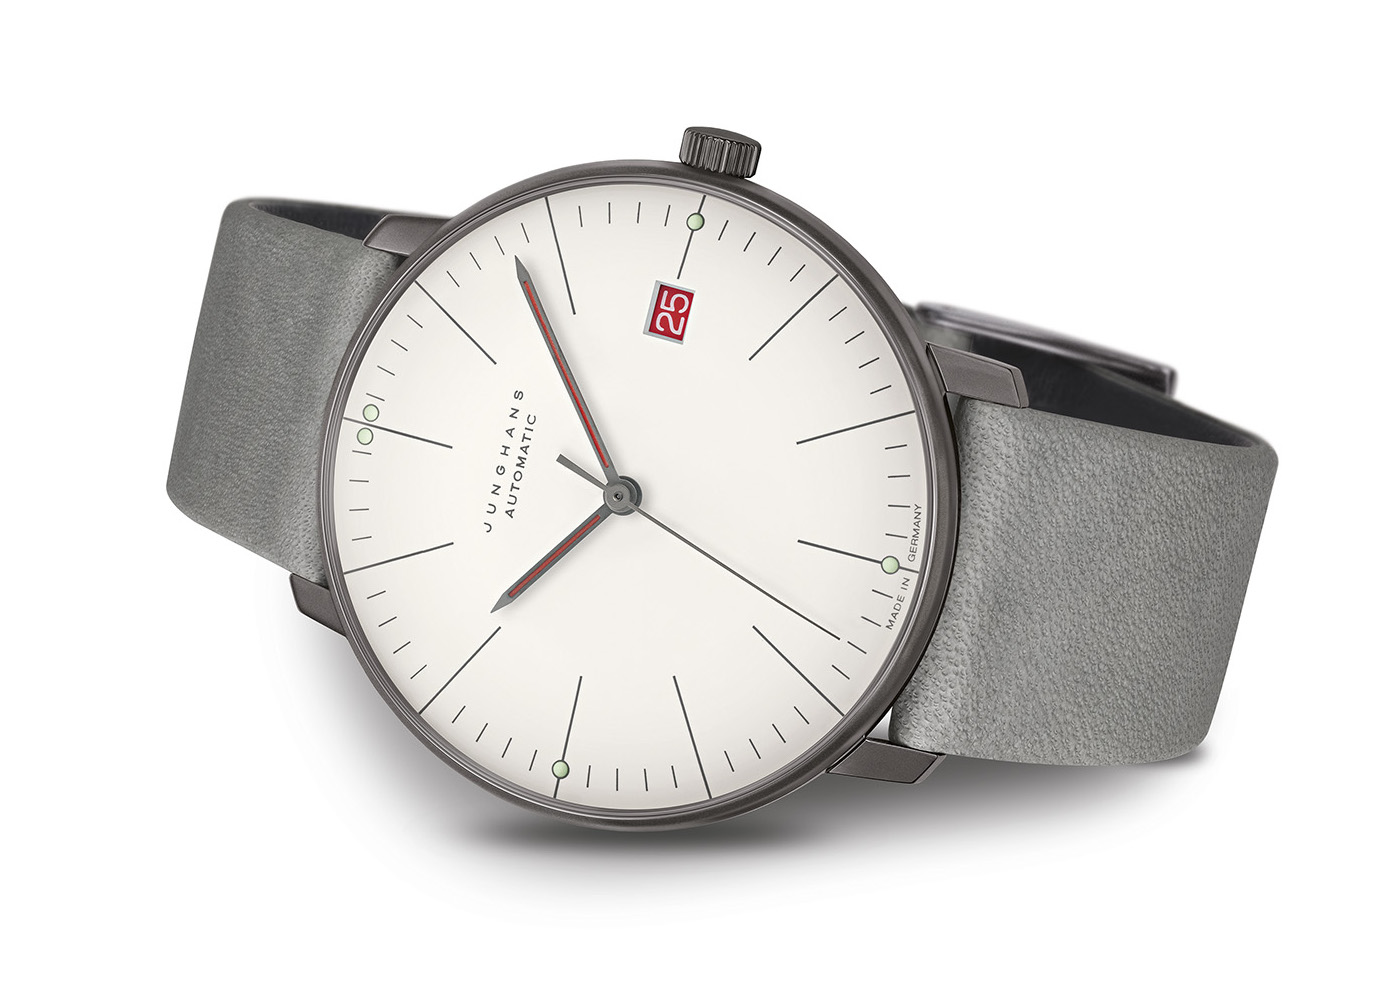 Junghans-Max-Bill-Automatic-100-Jahre-Bauhaus-Watch